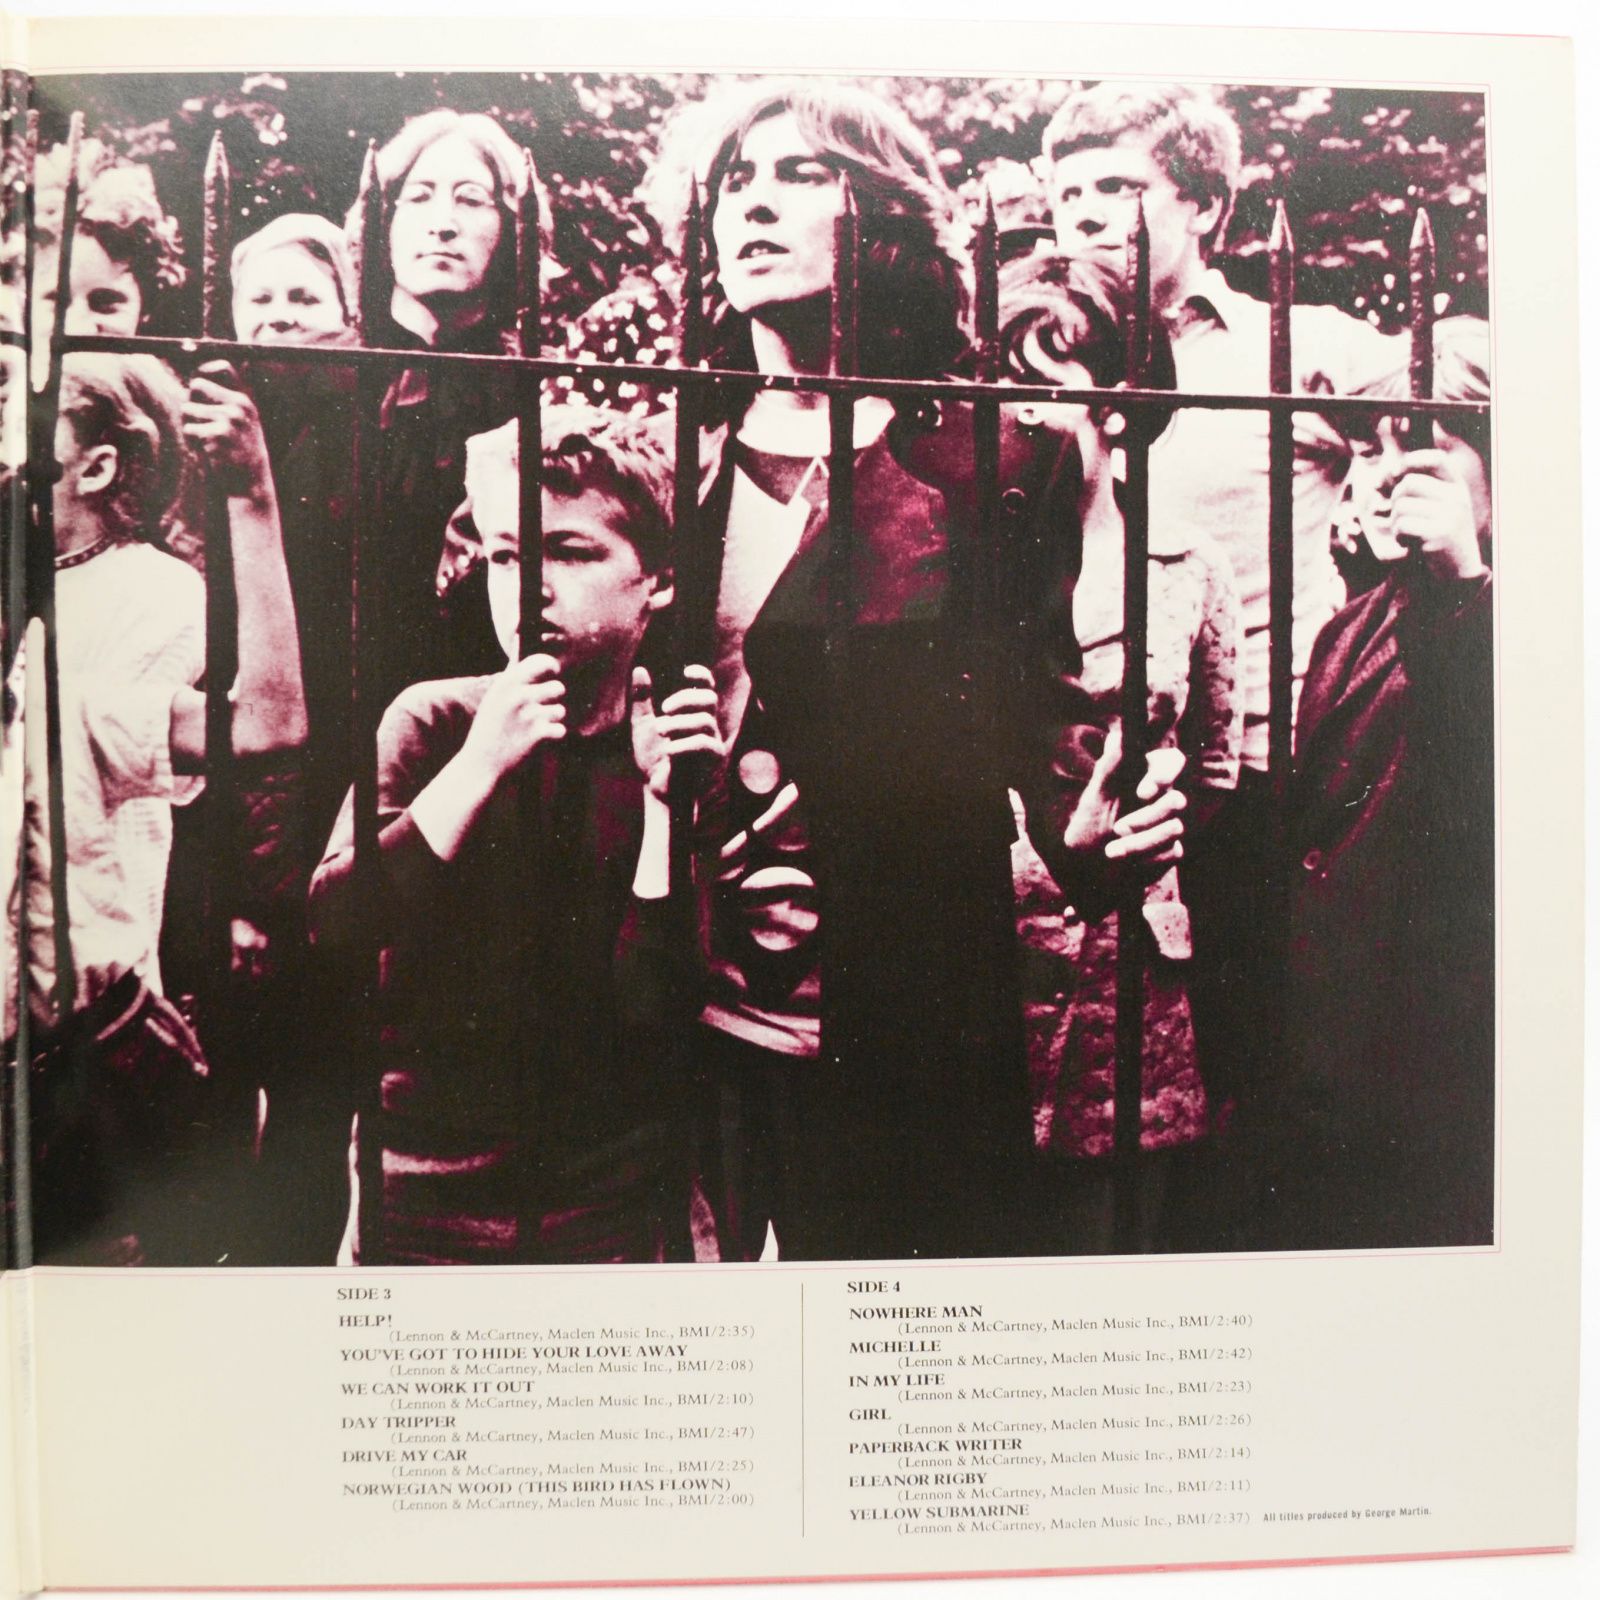 Beatles — 1962-1966 (2LP), 1973